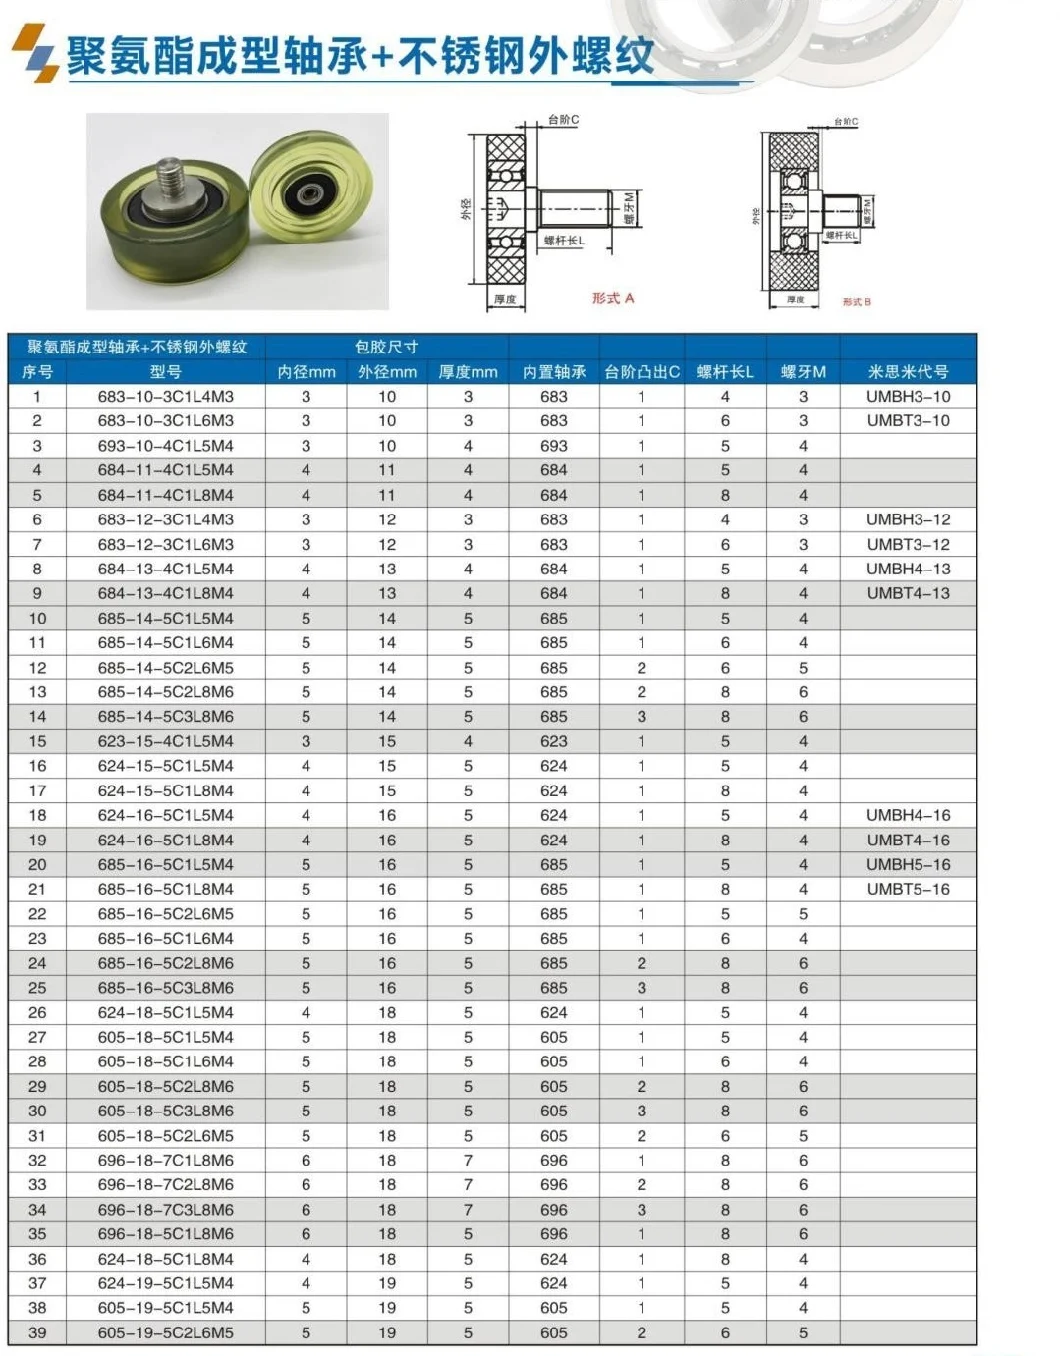 Silicon Rubber / Urethane Molded Bearings - Flat, with Threaded Shaft(UMBT20-45A UMBH15-45A UMBT15-45A UMBH20-45 UMBT20-45 UMBH15-45 UMBT15-45)